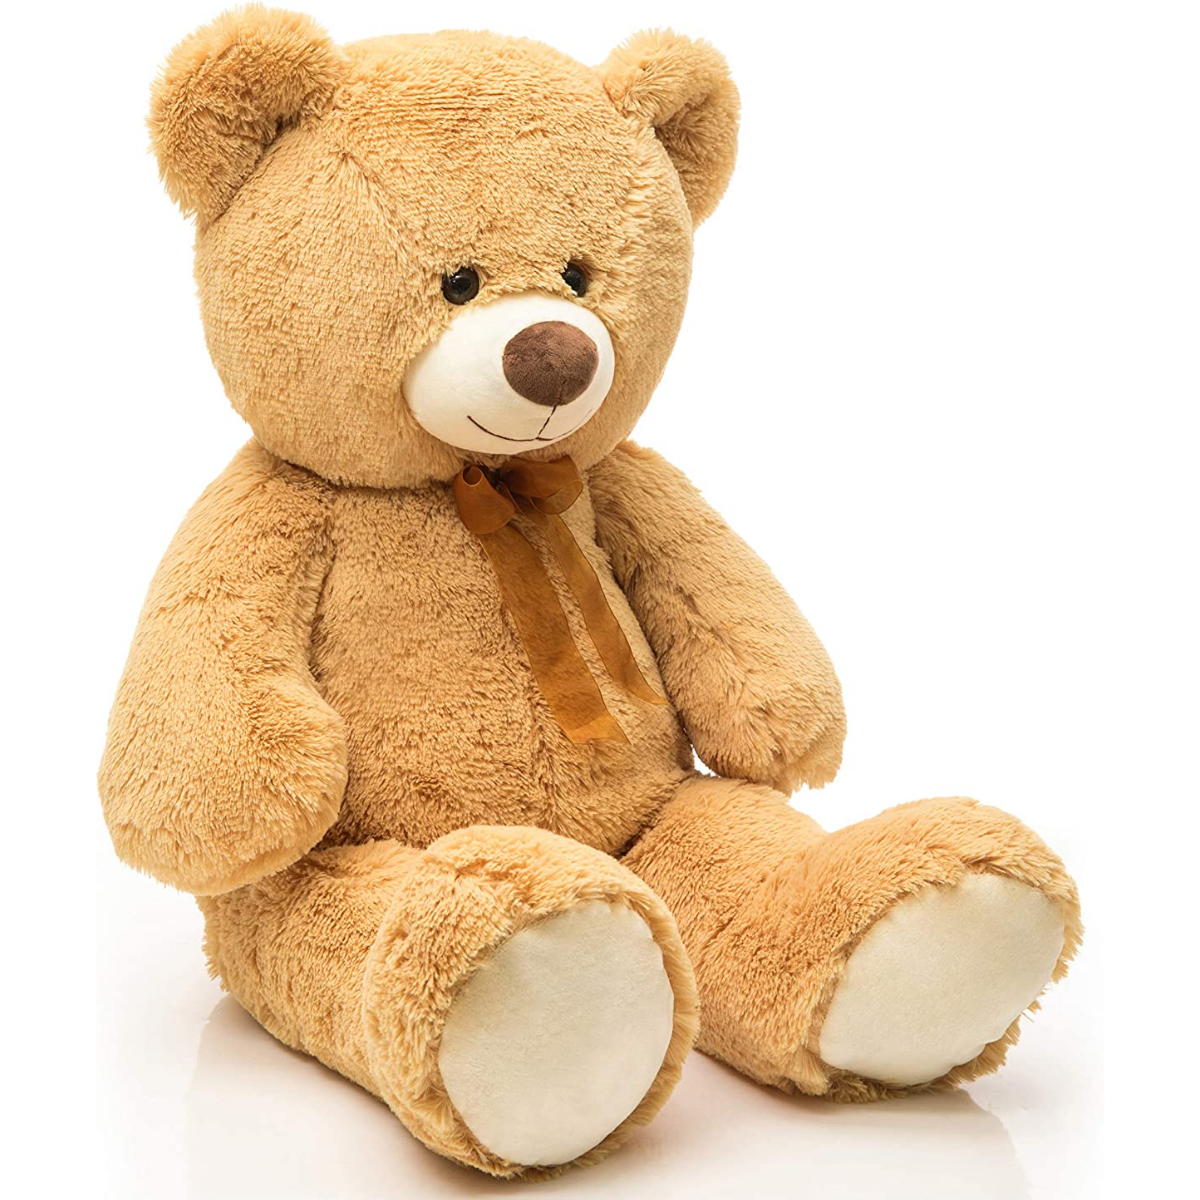 MorisMos Giant Teddy Bear 35.4'' Soft Stuffed Animal Big Bear Plush Toy 